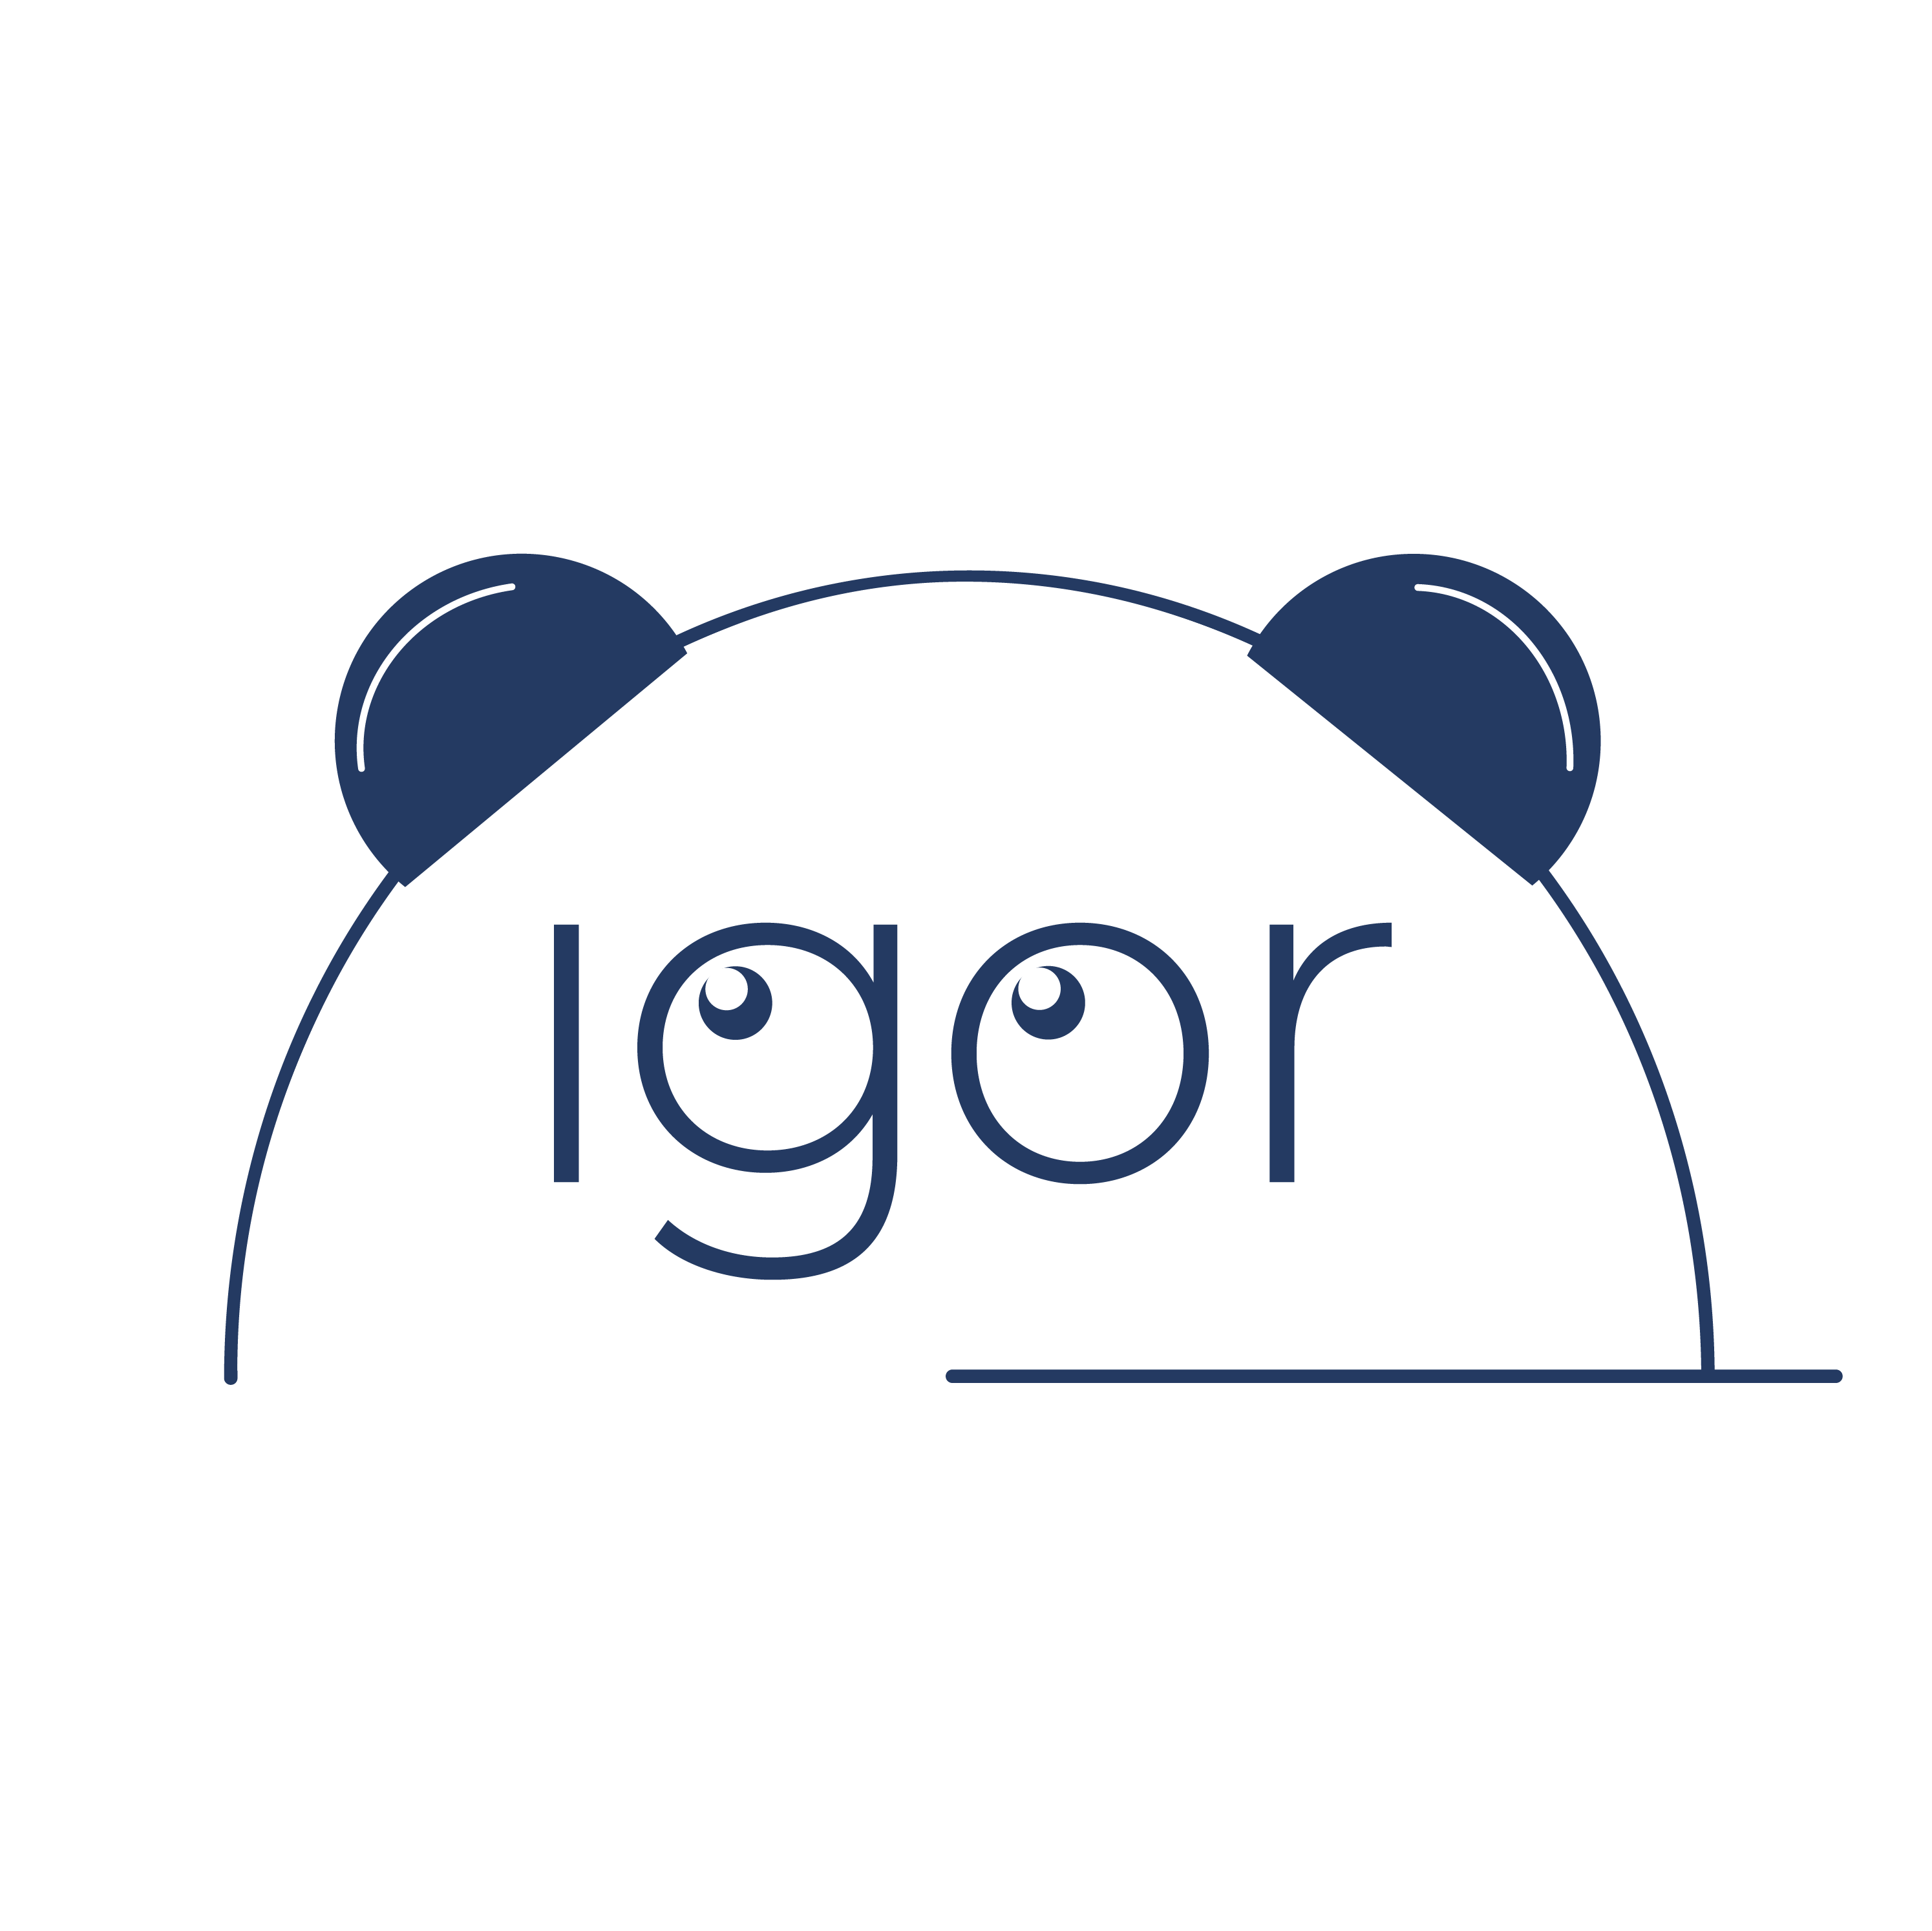 Petit Igor design logo